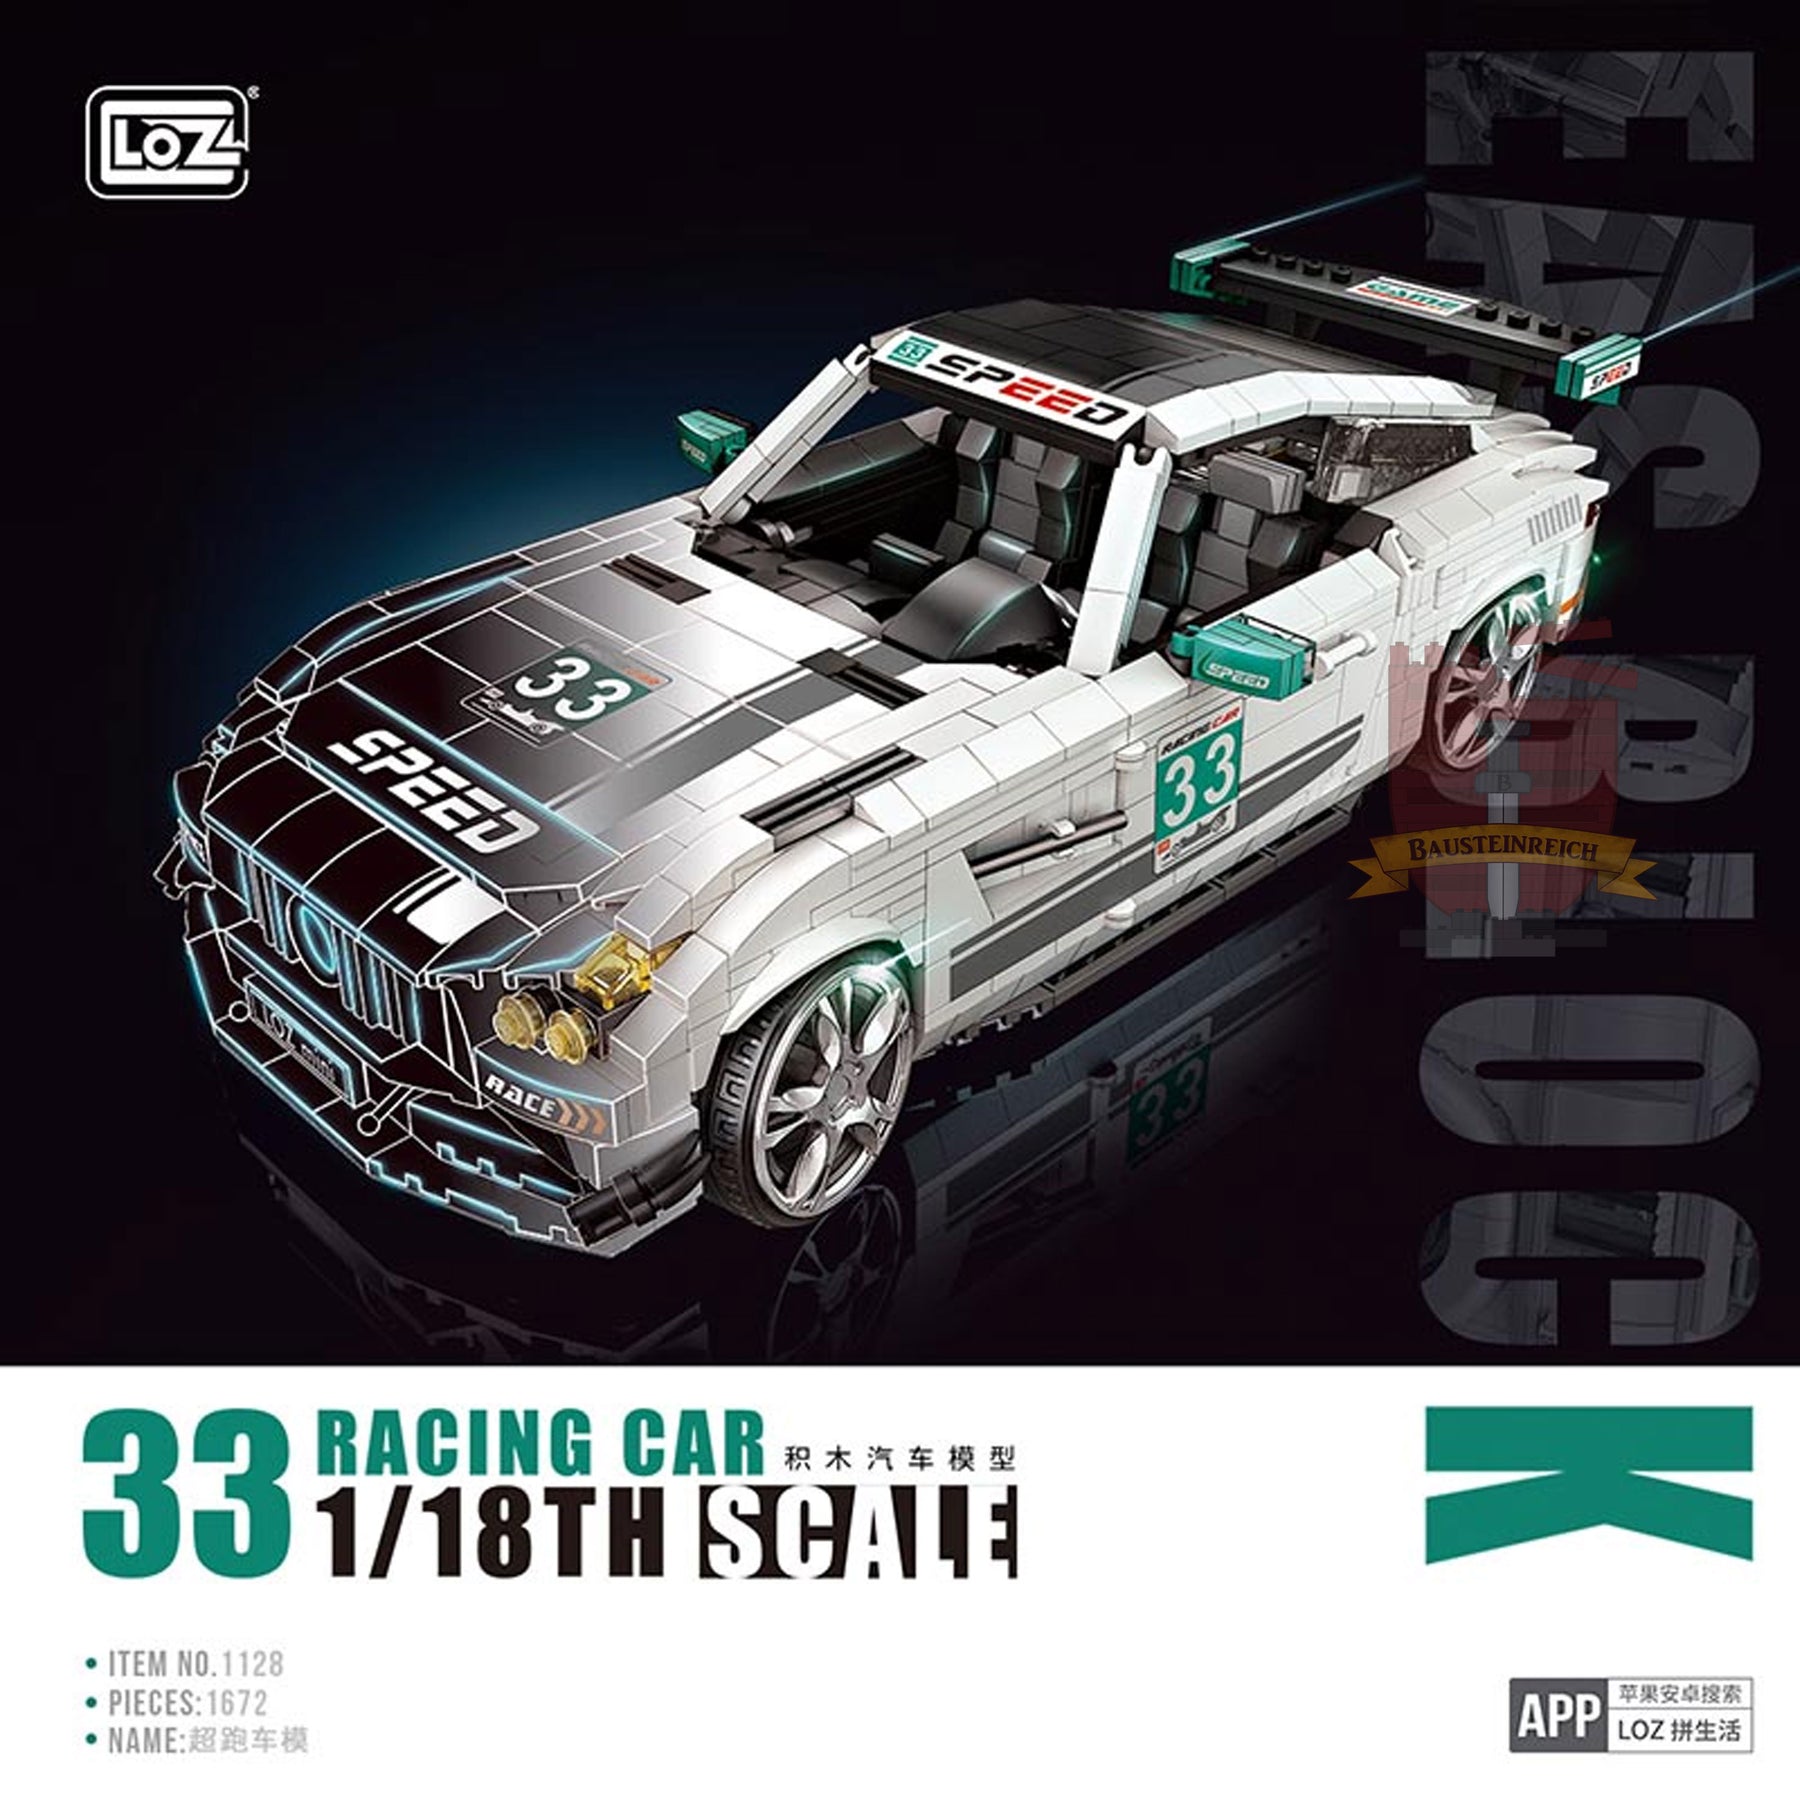 1128 - Super Sportwagen (LOZ)